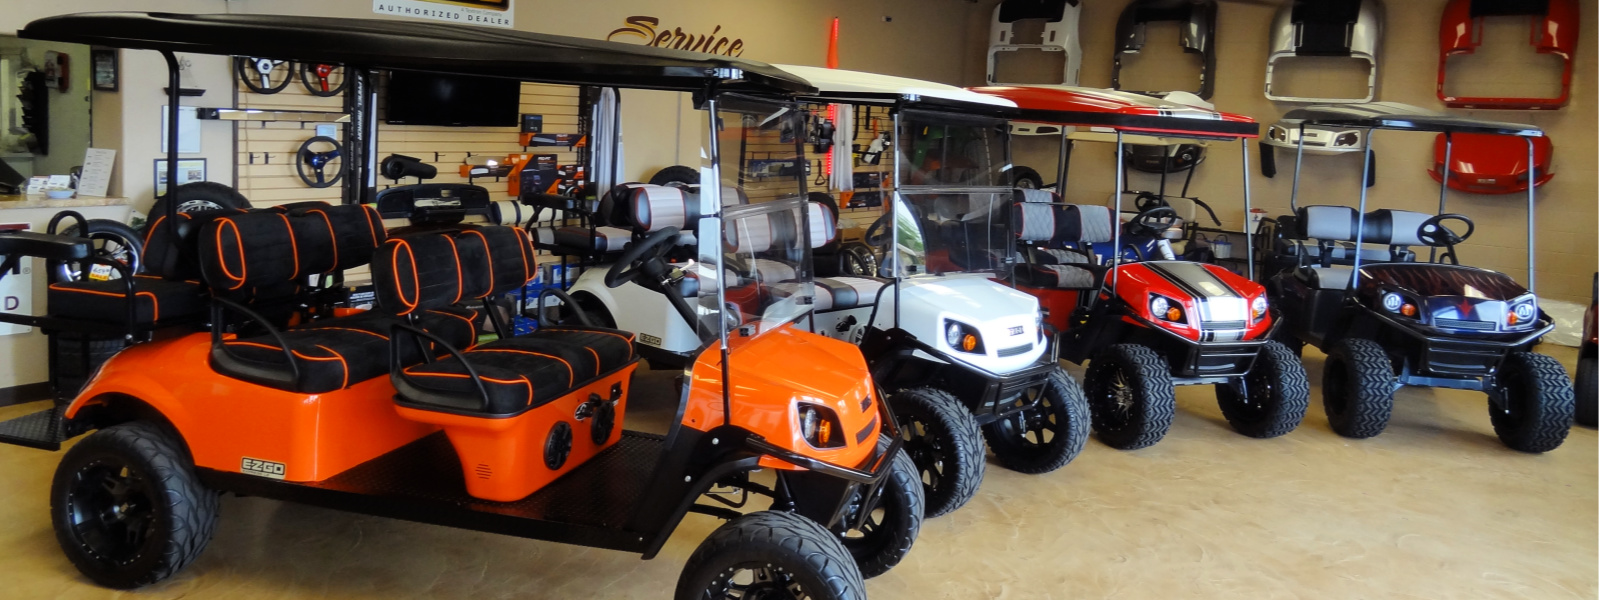 2019 Cushman Hauler 1200 for sale in Premier Golf Cars, Lake Havasu City, Arizona